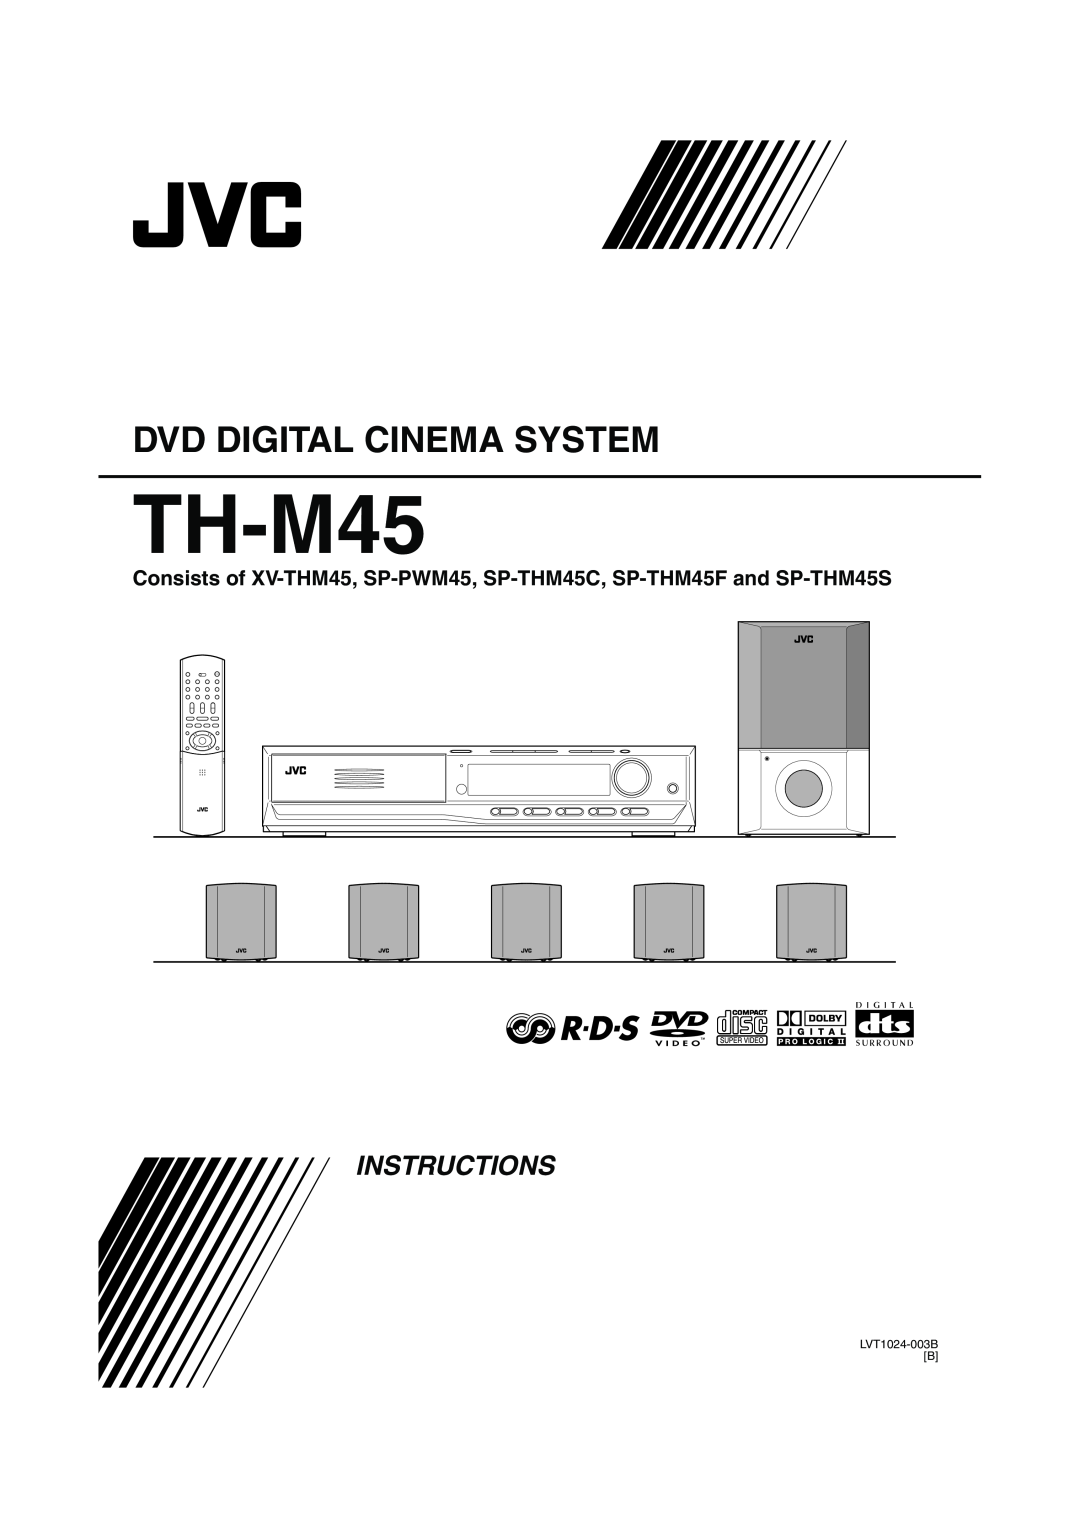 JVC manual TH-M45, Dvd Digital Cinema System, Instructions, LVT1024-003BB 